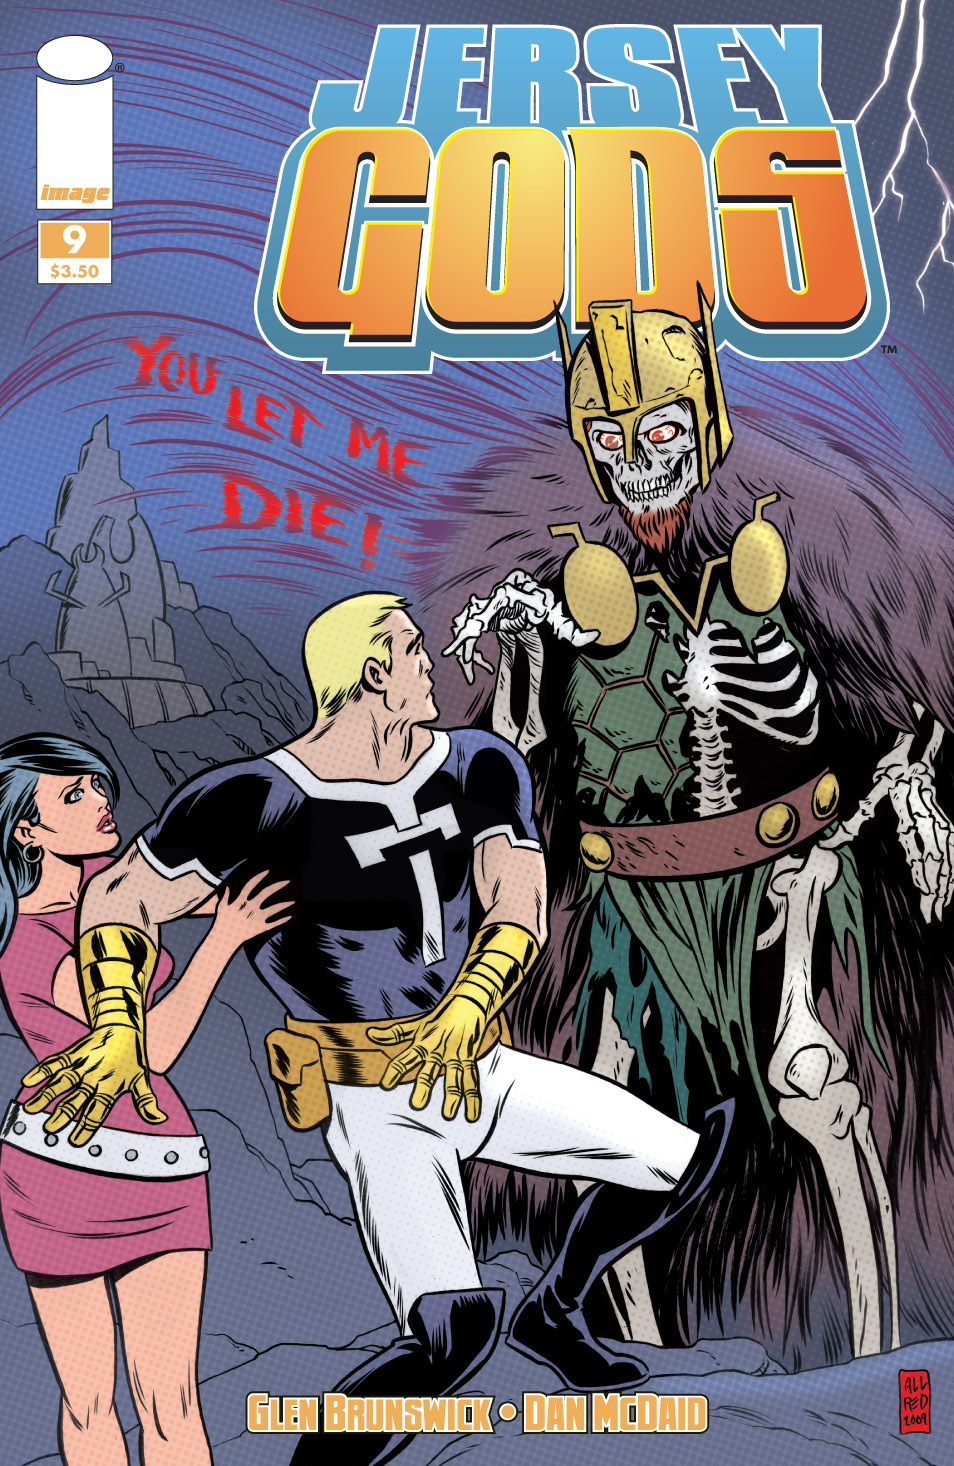 Read online Jersey Gods comic -  Issue #9 - 1